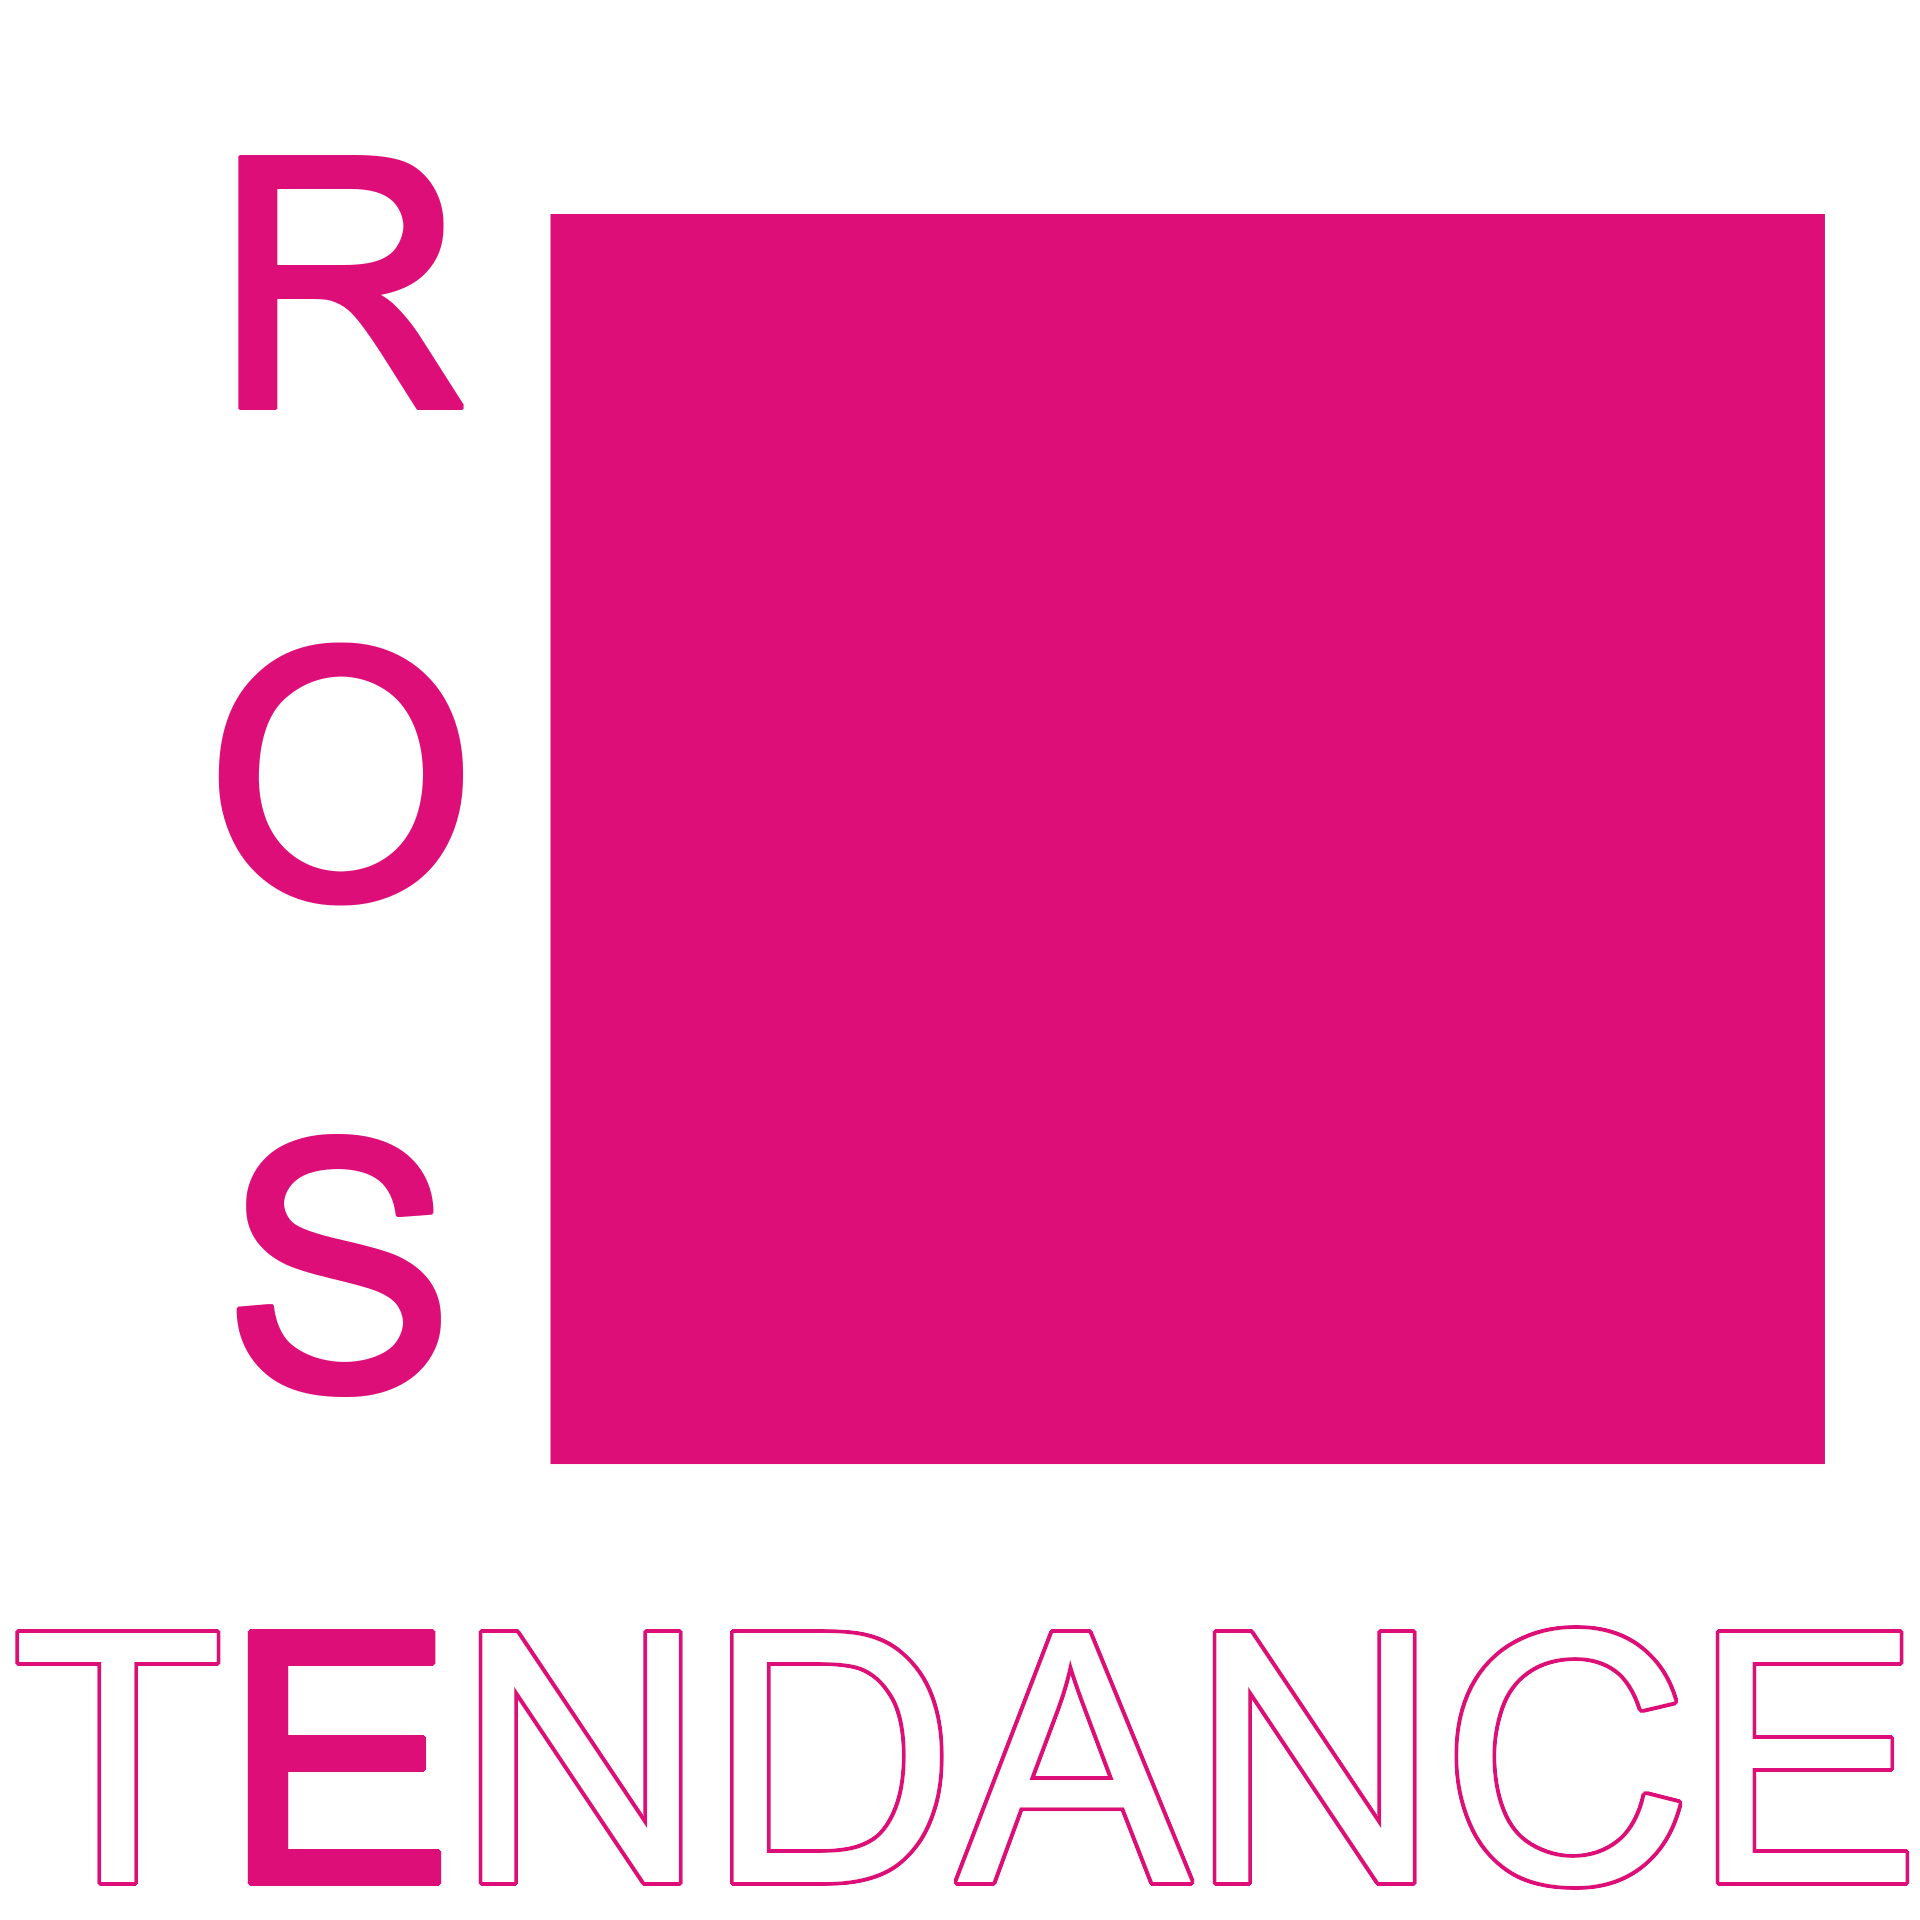 Rose Tendance